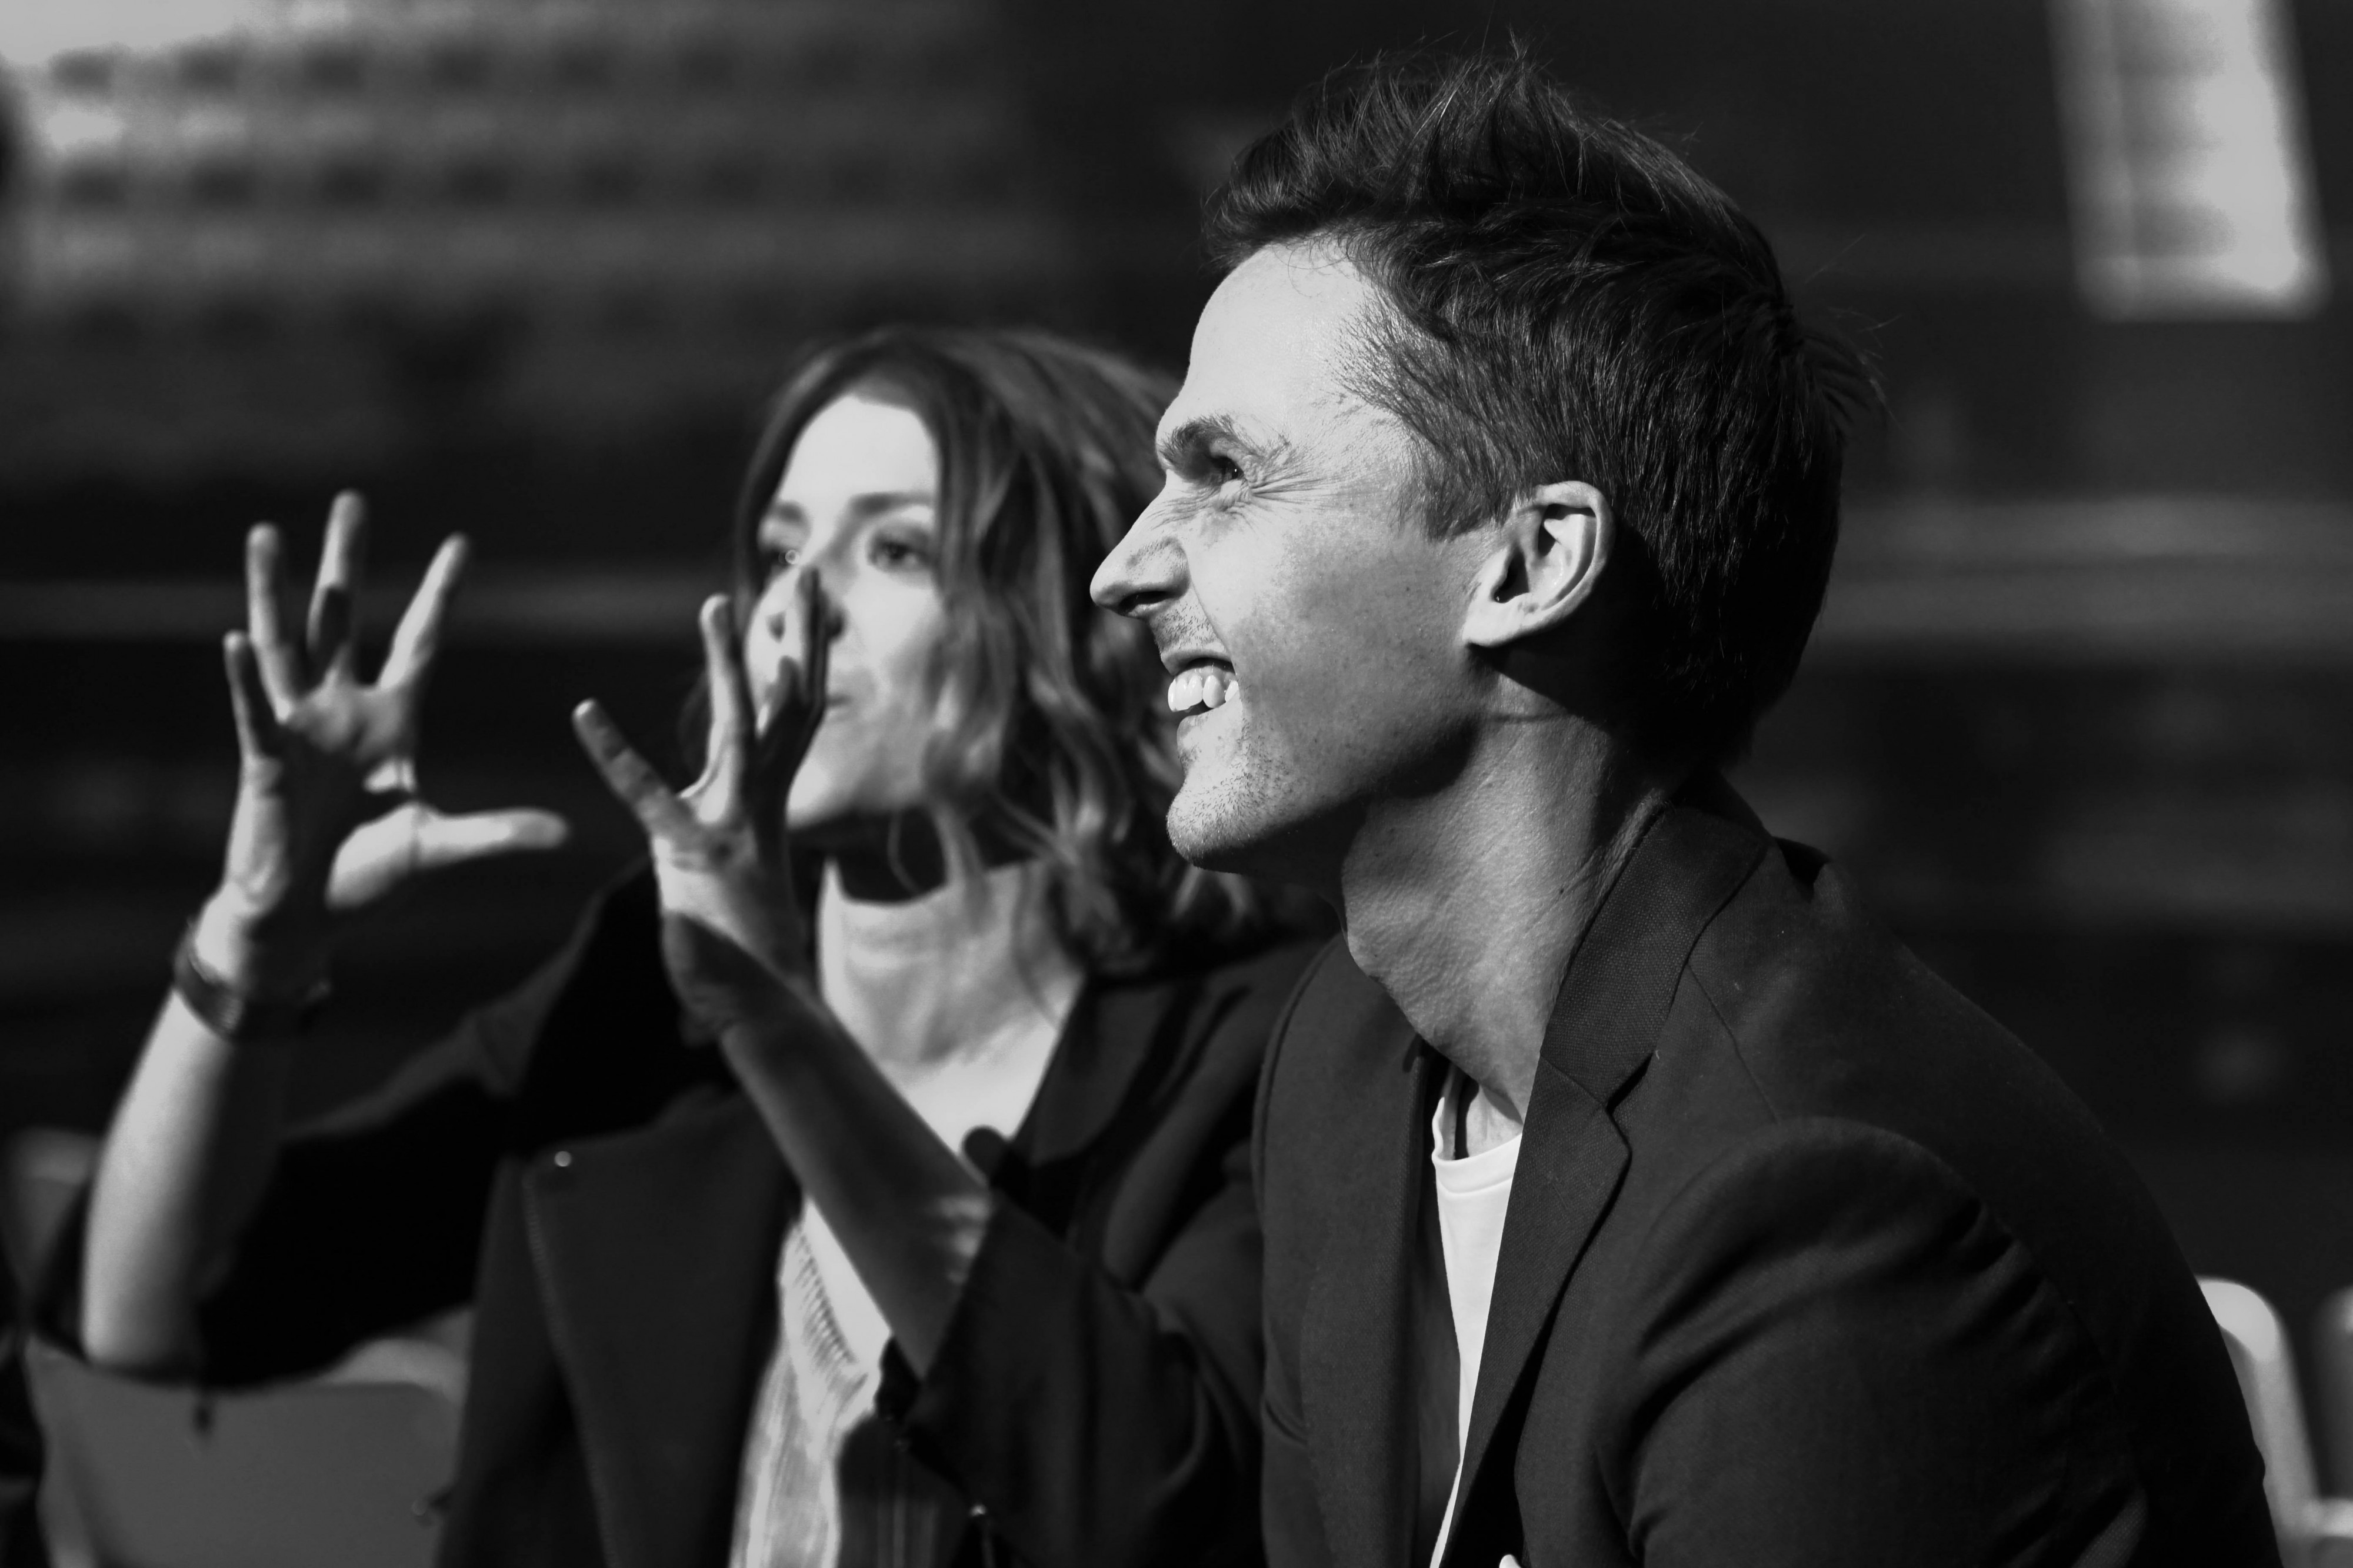 Clara Henry 02 & David Lindgren 01 @ Melodifestivalen 2017 - Jonatan Svensson Glad